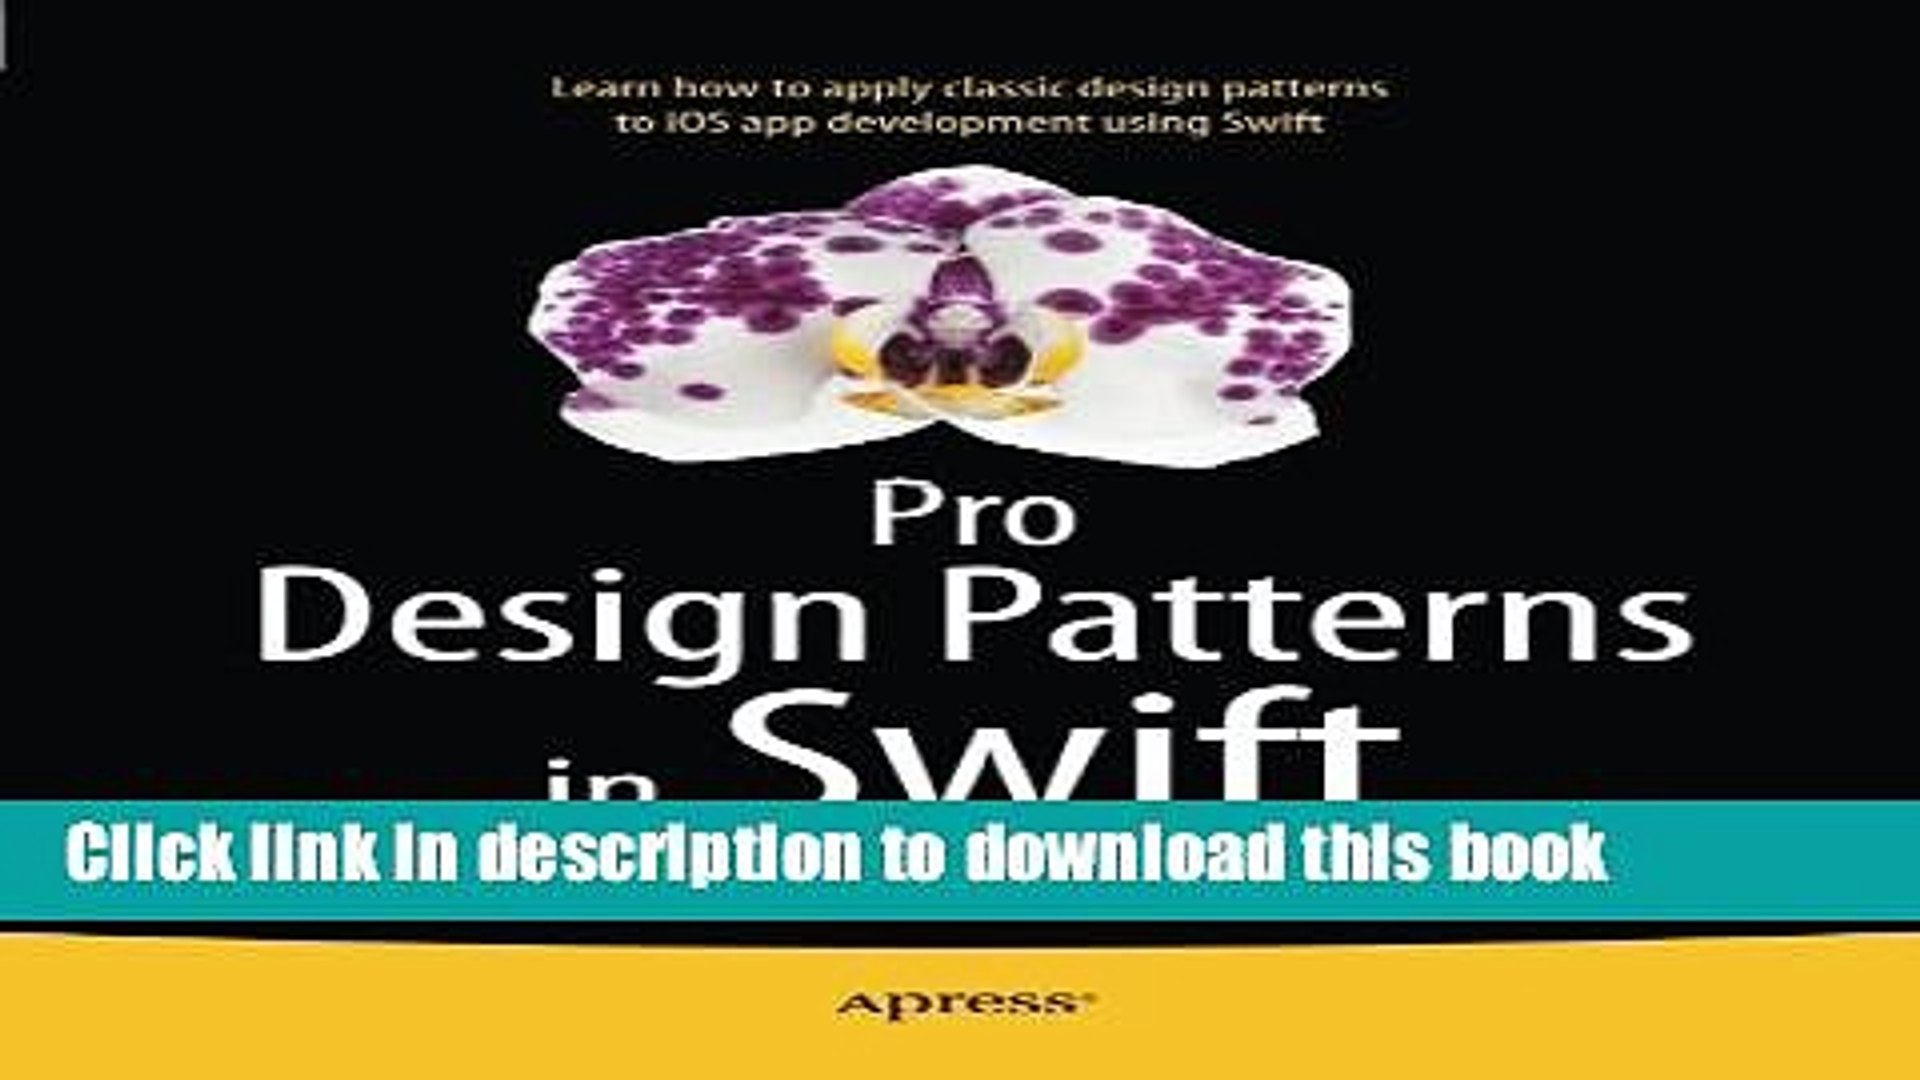 [PDF] Pro Design Patterns in Swift E-Book Free